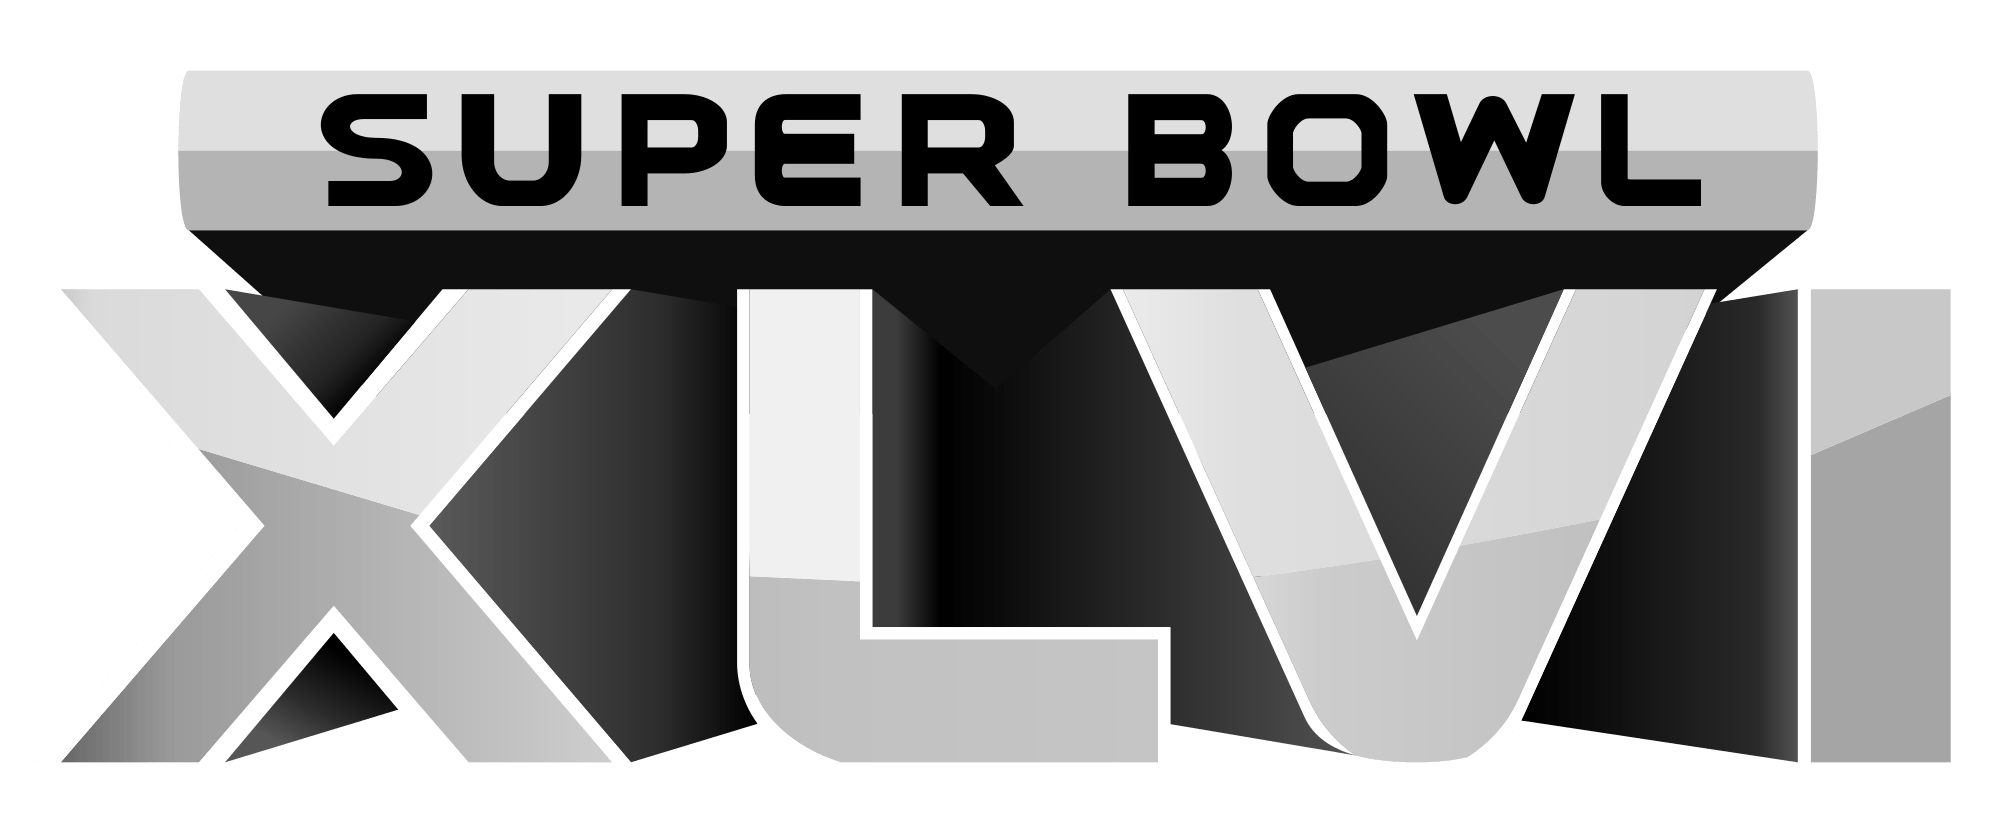 XLVI Logo - Super Bowl XLVI Logo.svg